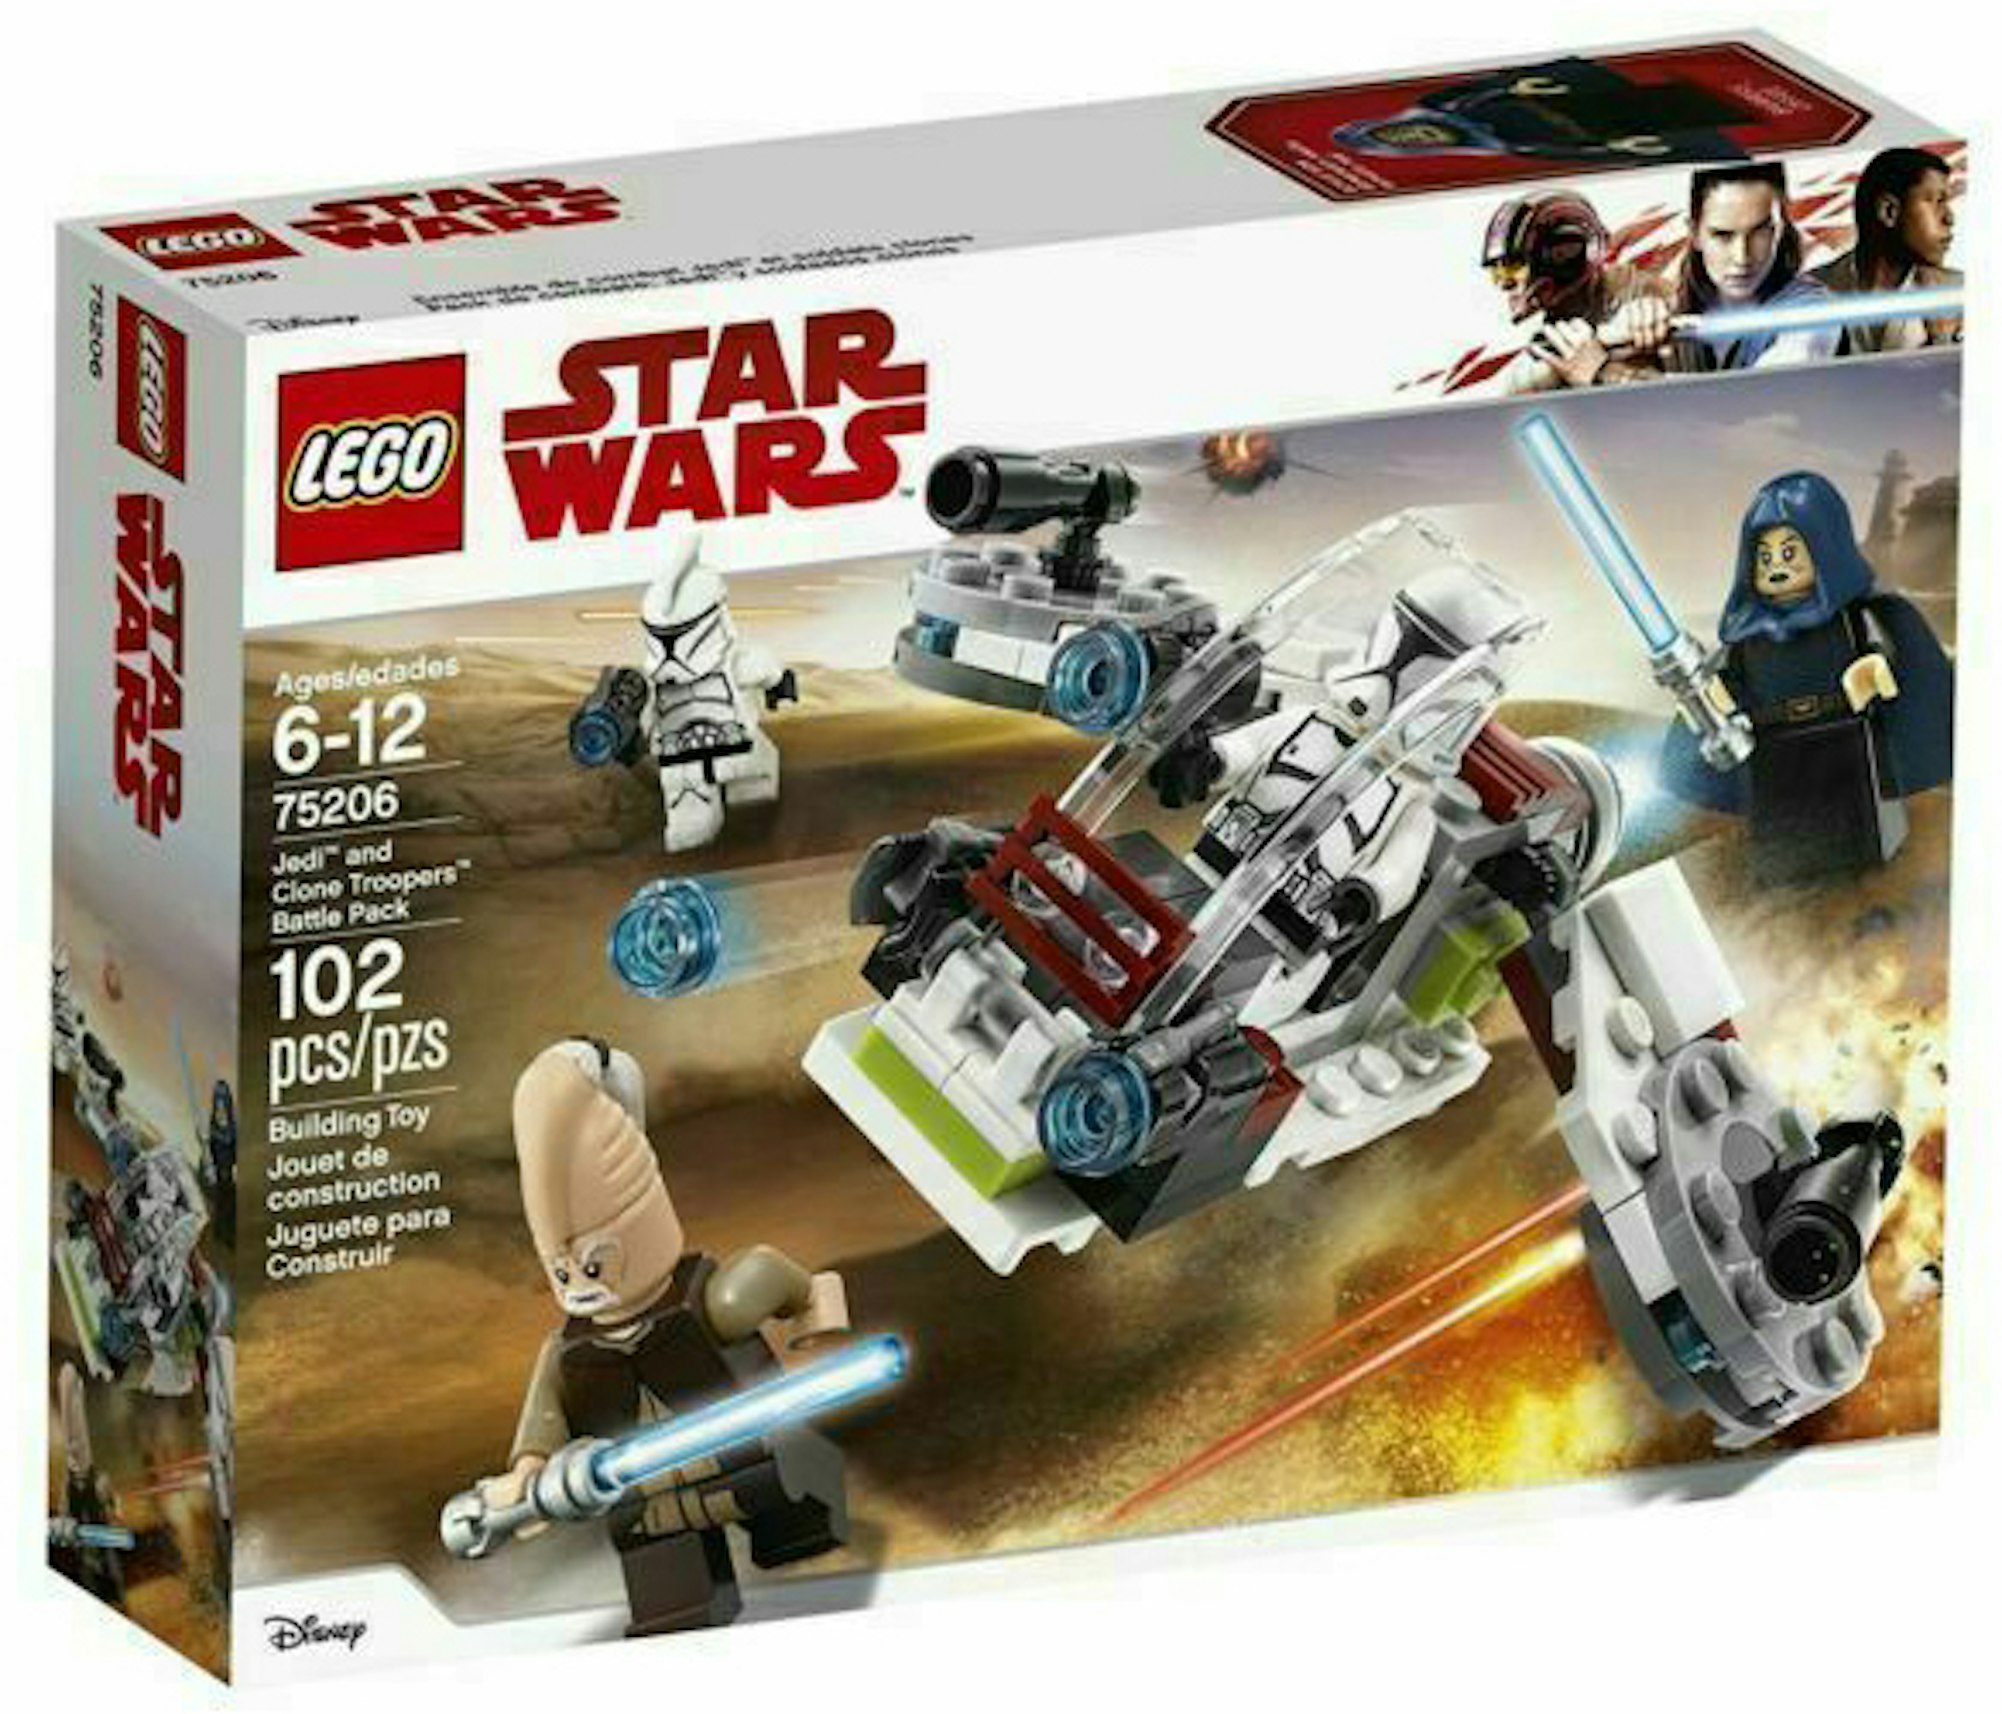 LEGO Wars Jedi & Clone Troopers Battle Pack Set 75206 - US